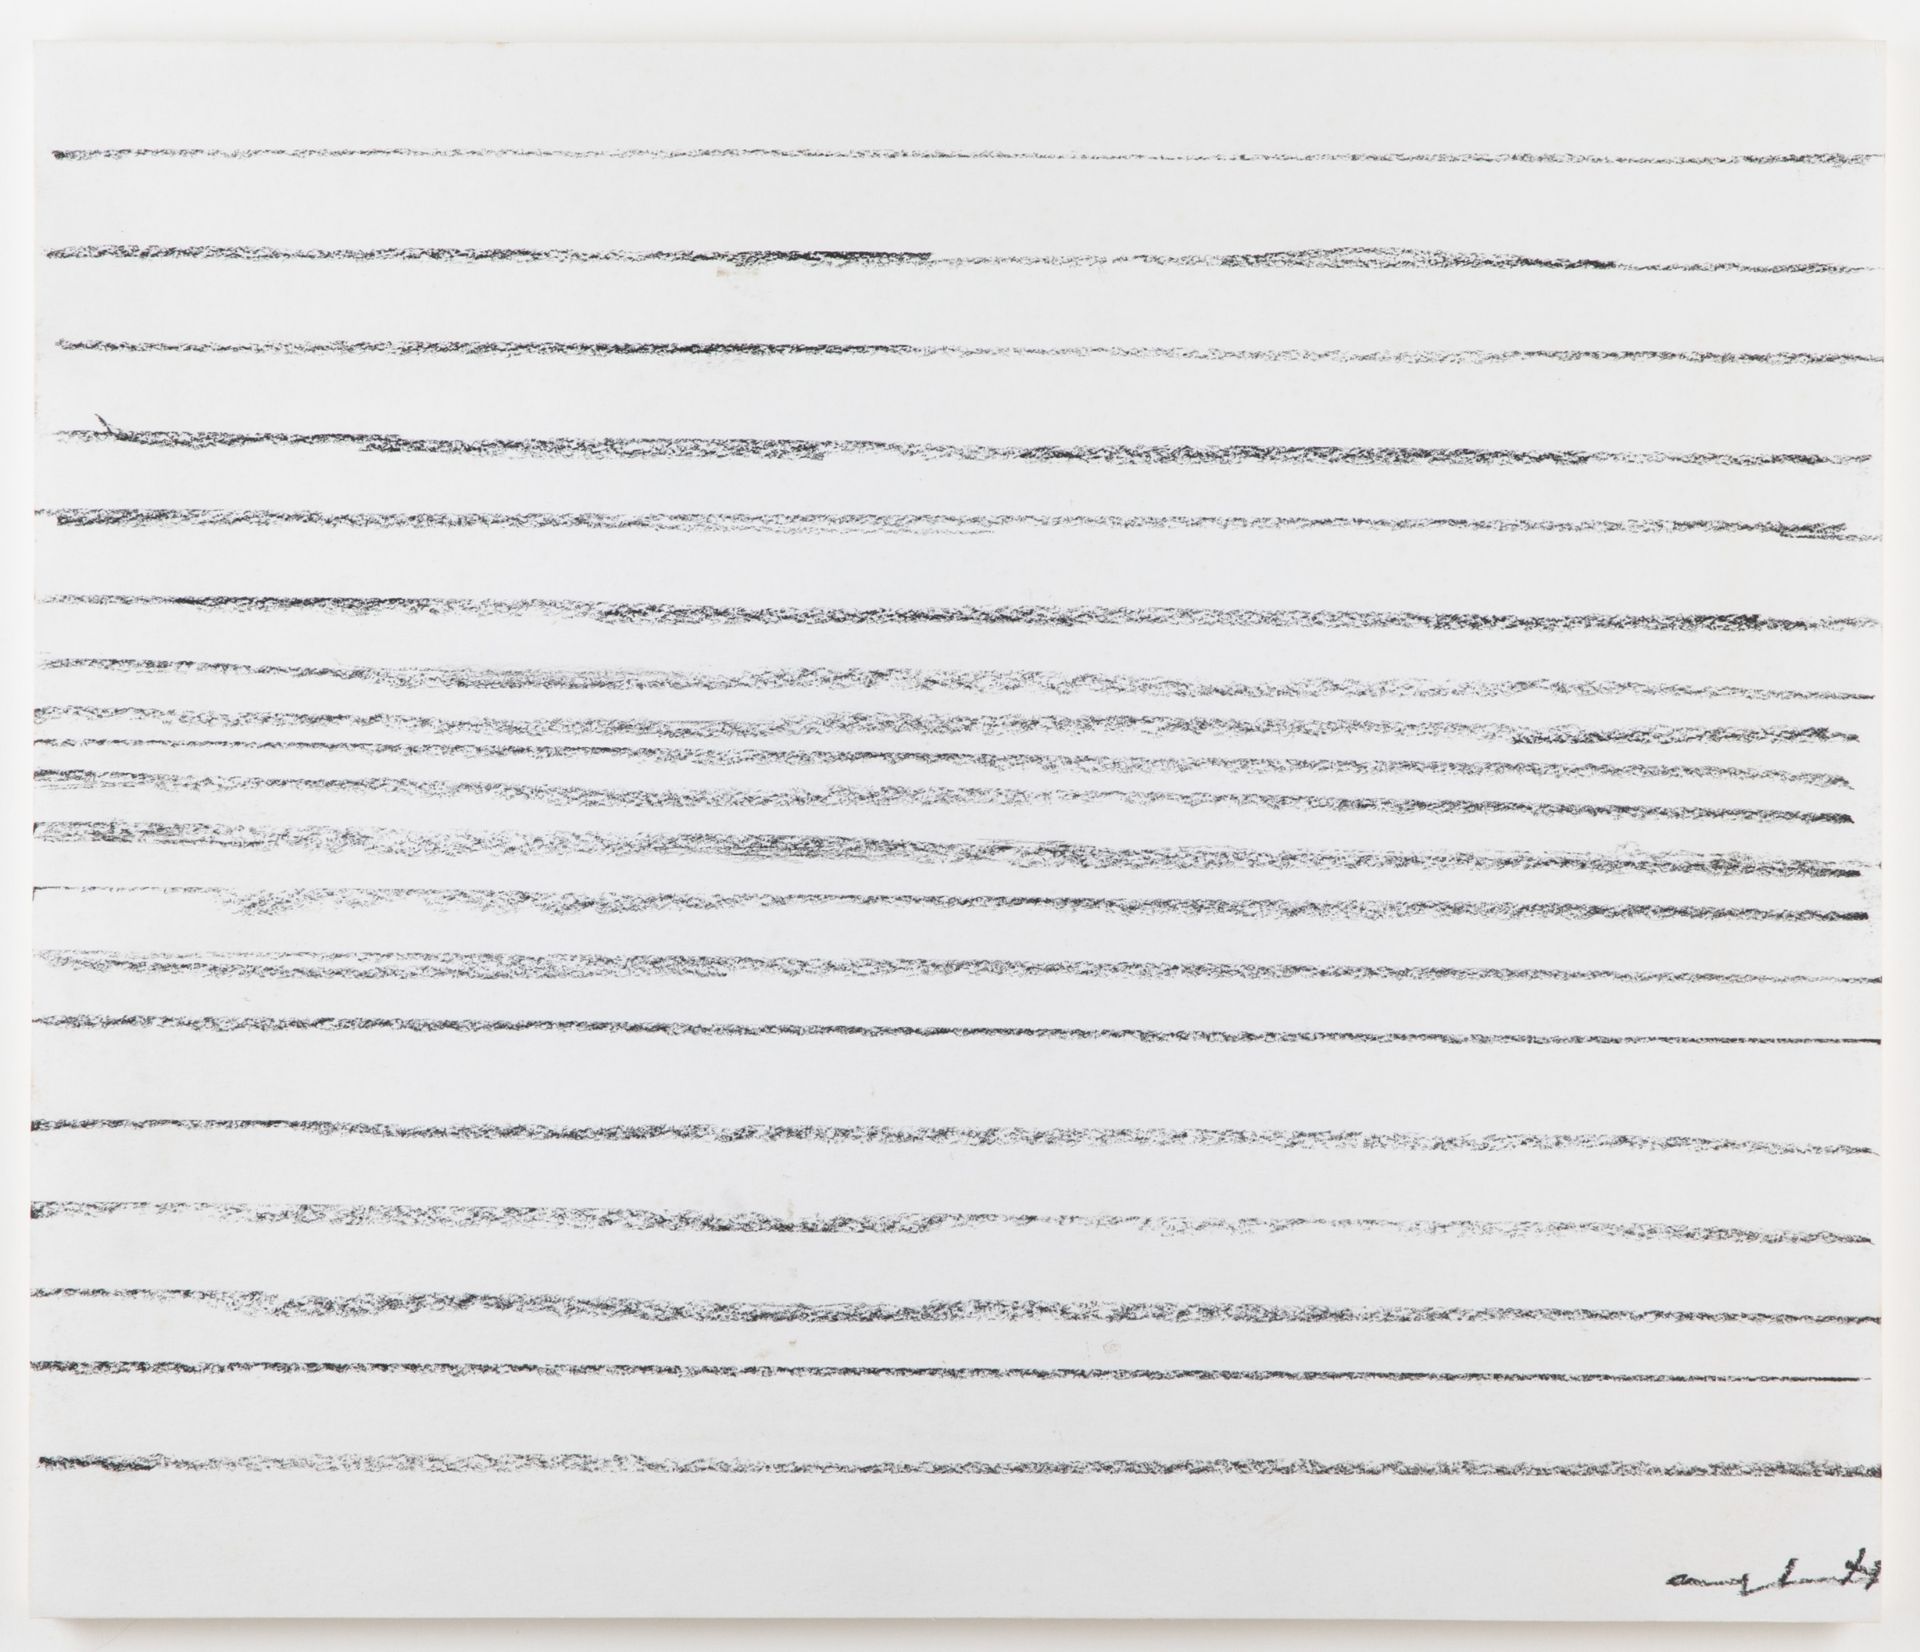 Leo Erb*, Untitled, Line drawing, graphite on light cardboard